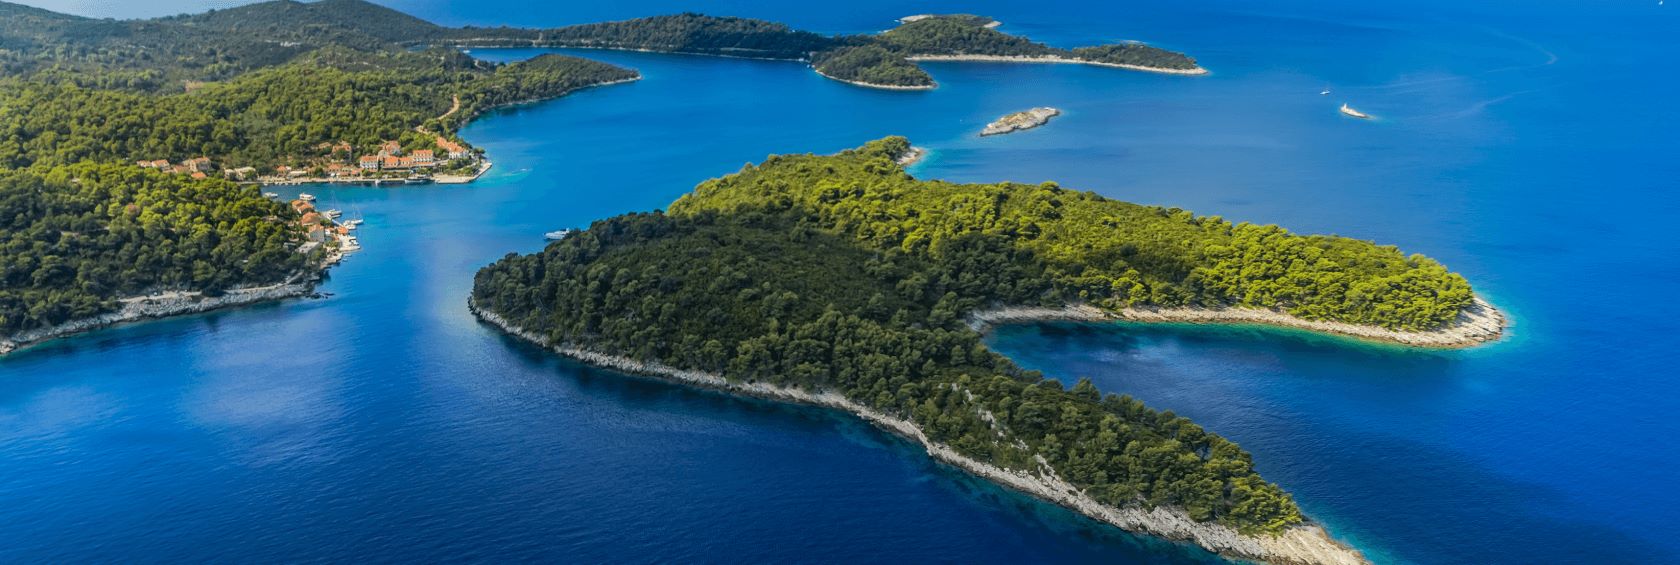 Croatia_islands_goolets